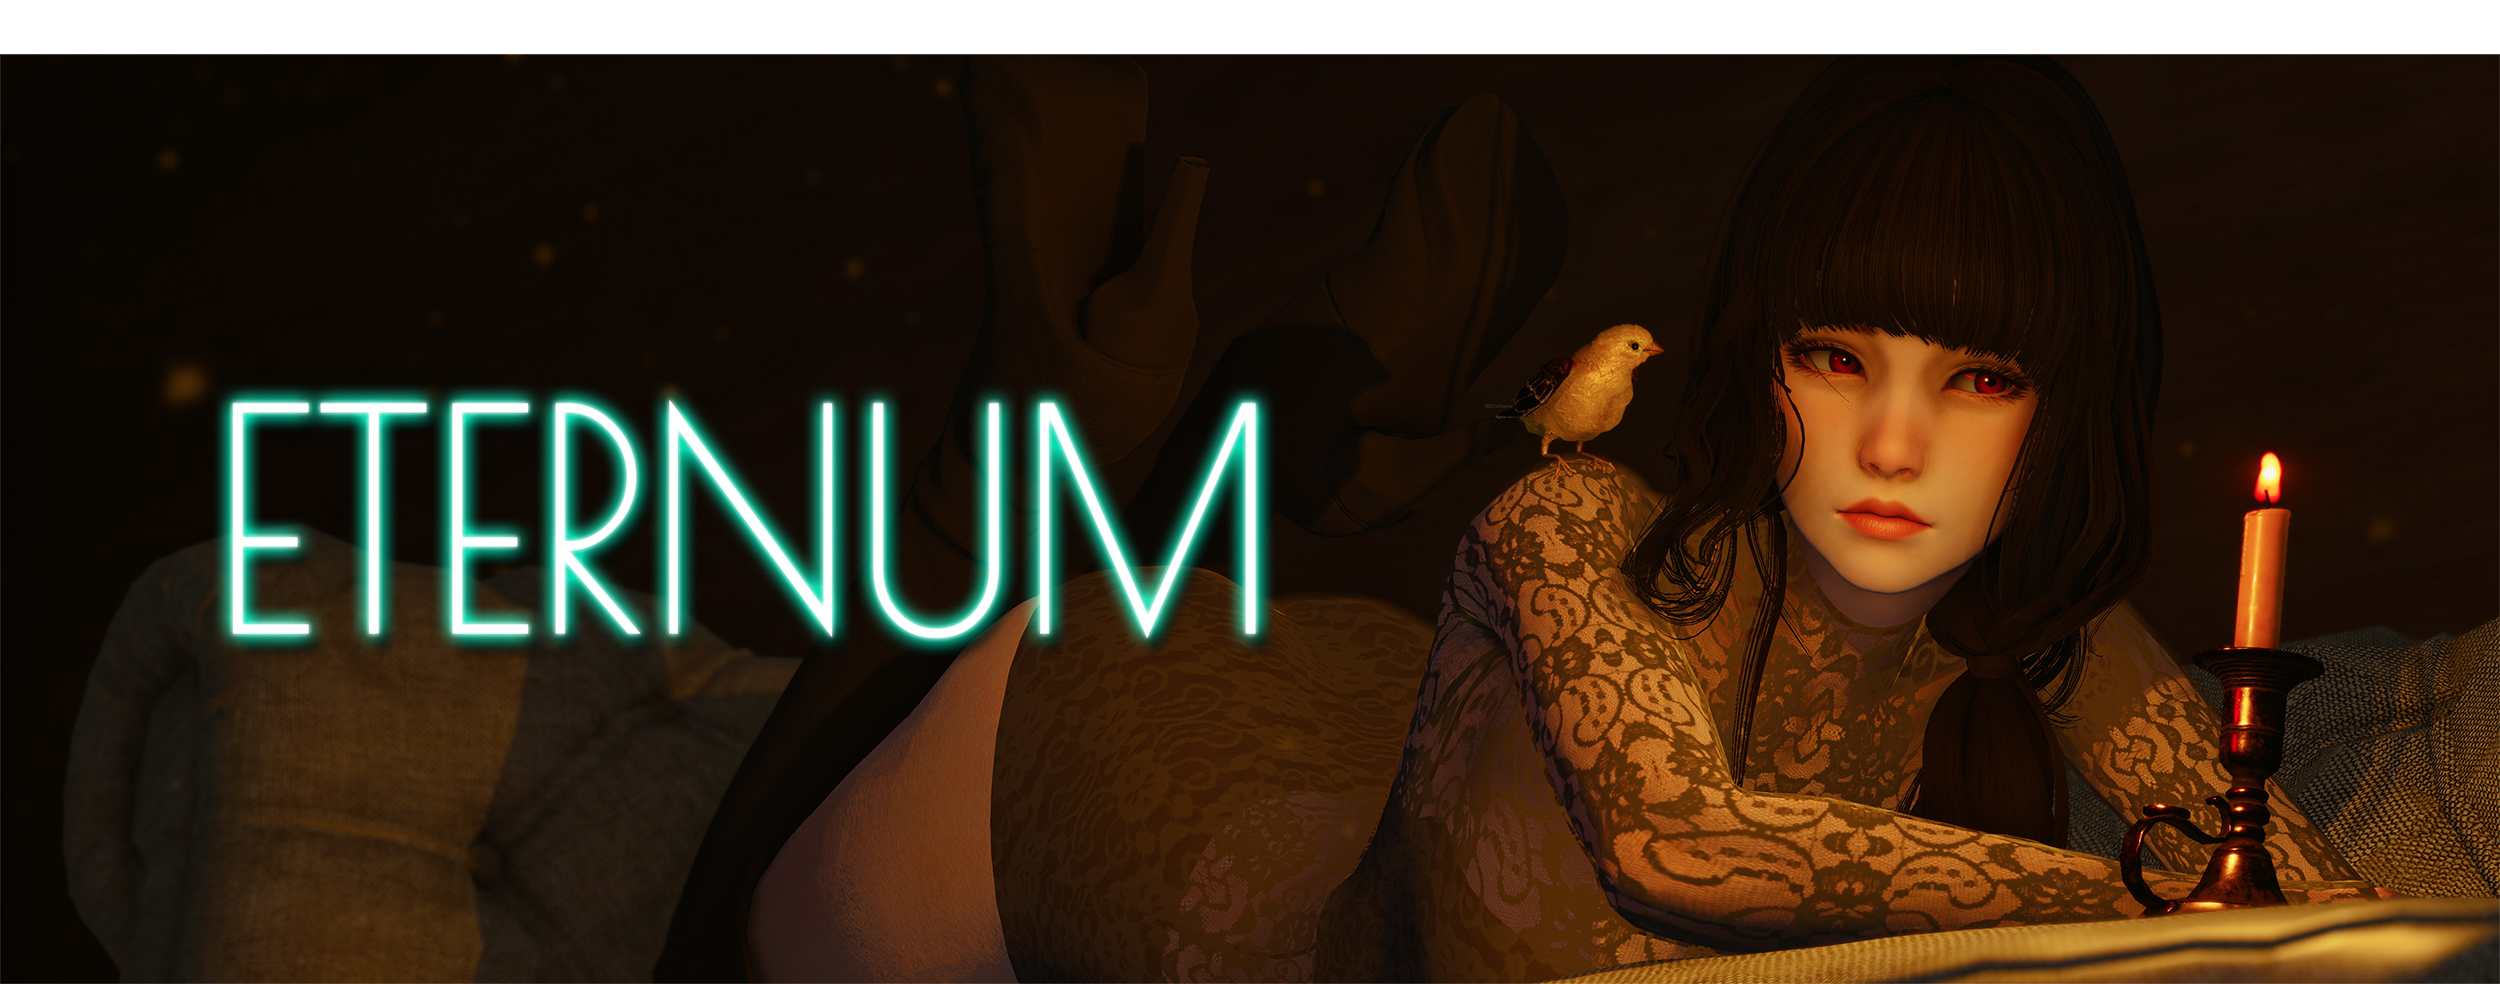 Eternum [Caribdis] Adult xxx Game Download